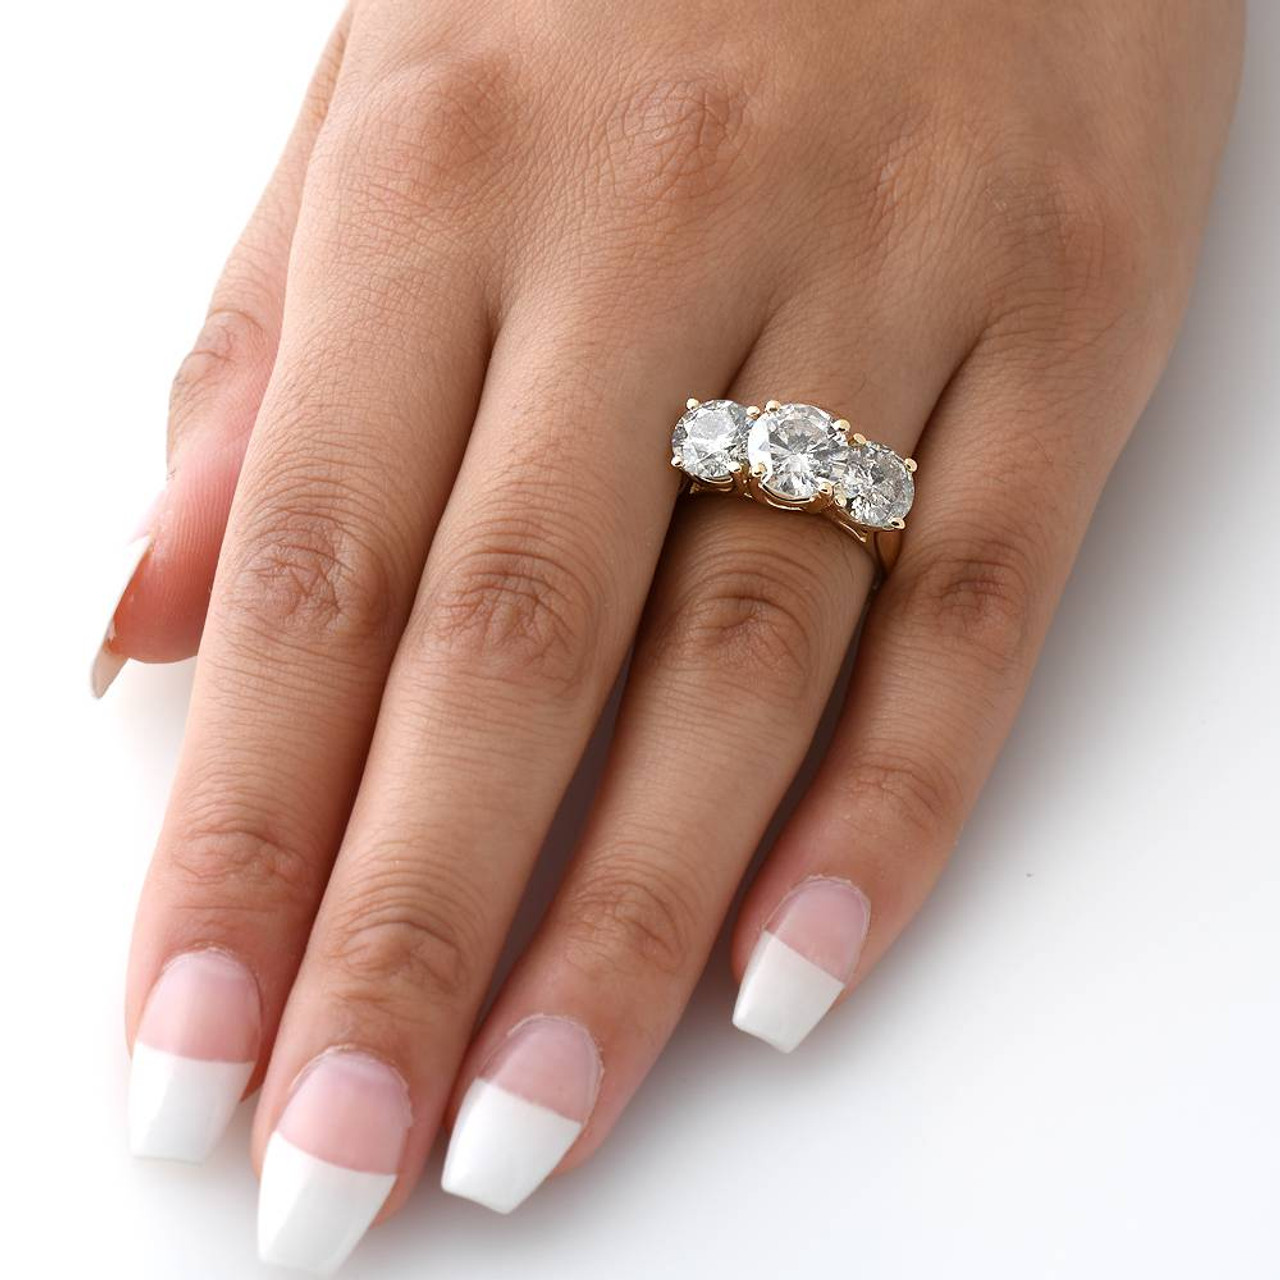 Big engagement ring settings for 3, 4 & 5 carat diamonds | Big engagement  rings, Big diamond engagement rings, Large engagement rings